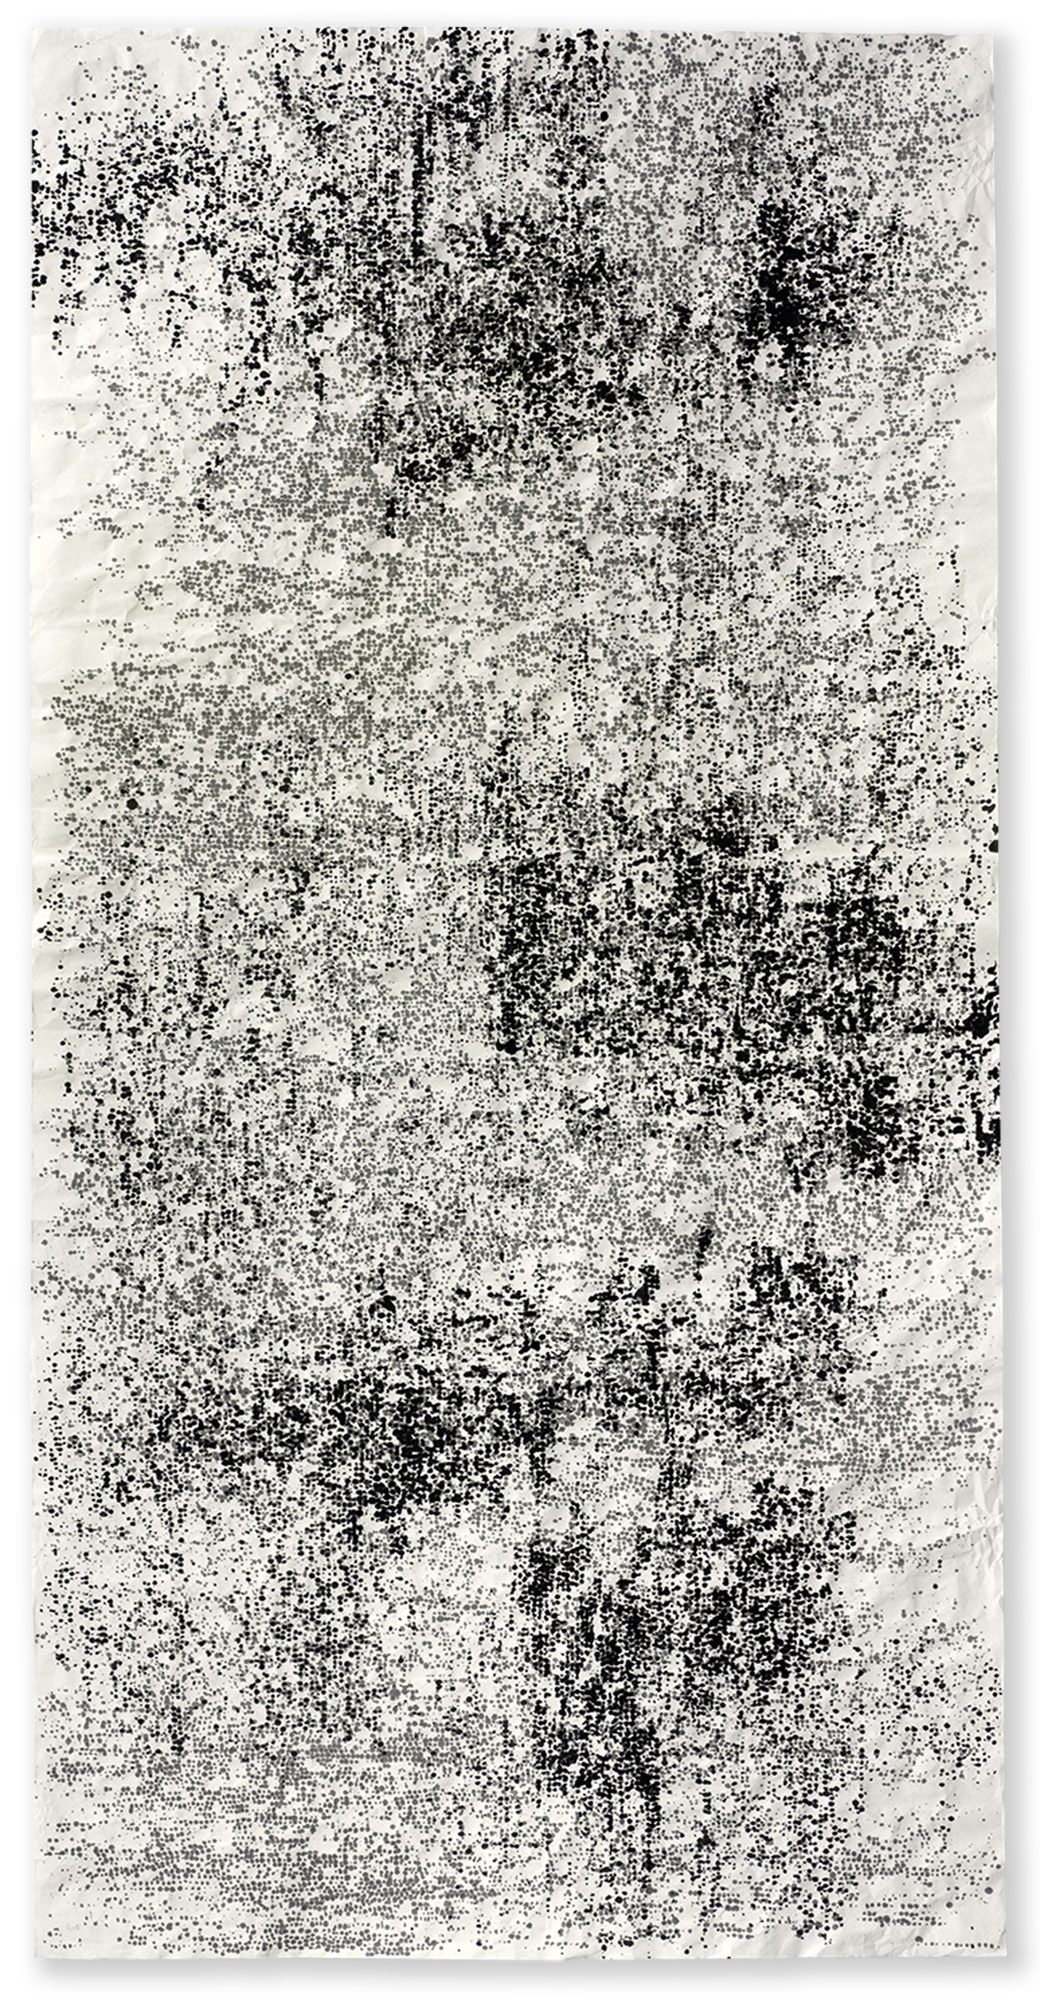 CHINA SERIES XVI / 2007, ink on Xuan paper, 248 x 124 cm